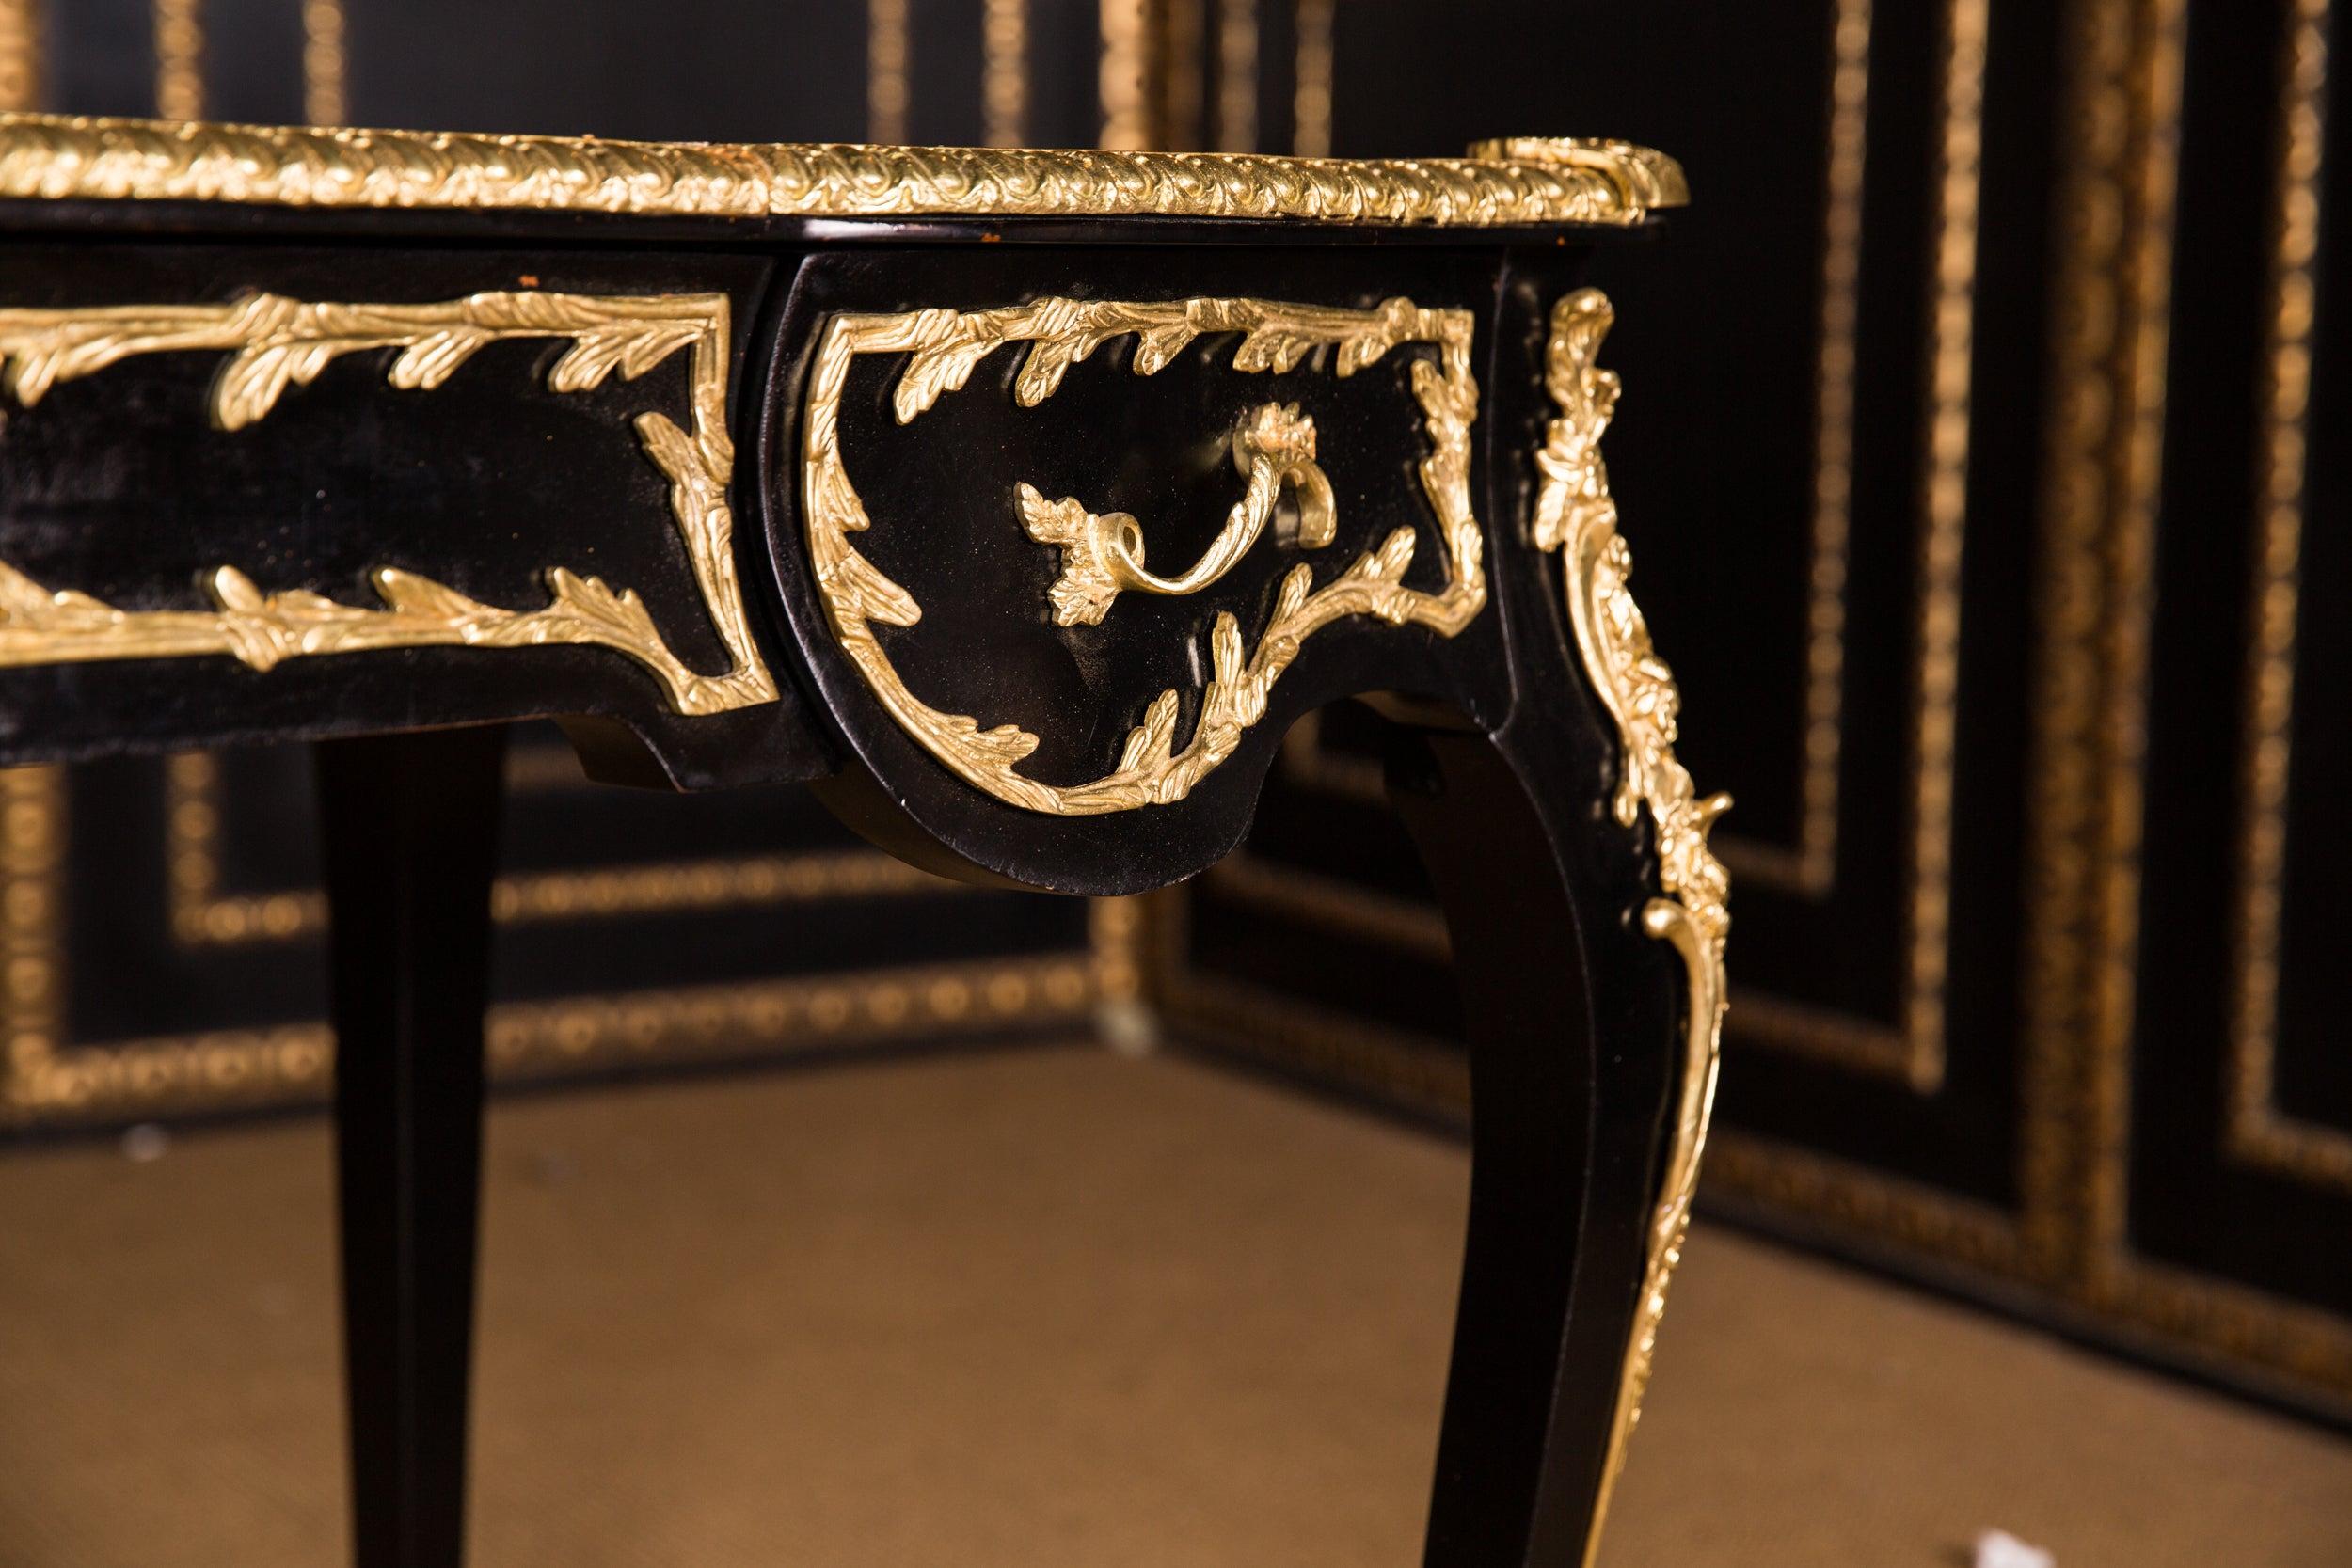 Polished 20th Century French Bureau Plat Desk in the Louis XV Style Black Ebonized Veneer For Sale